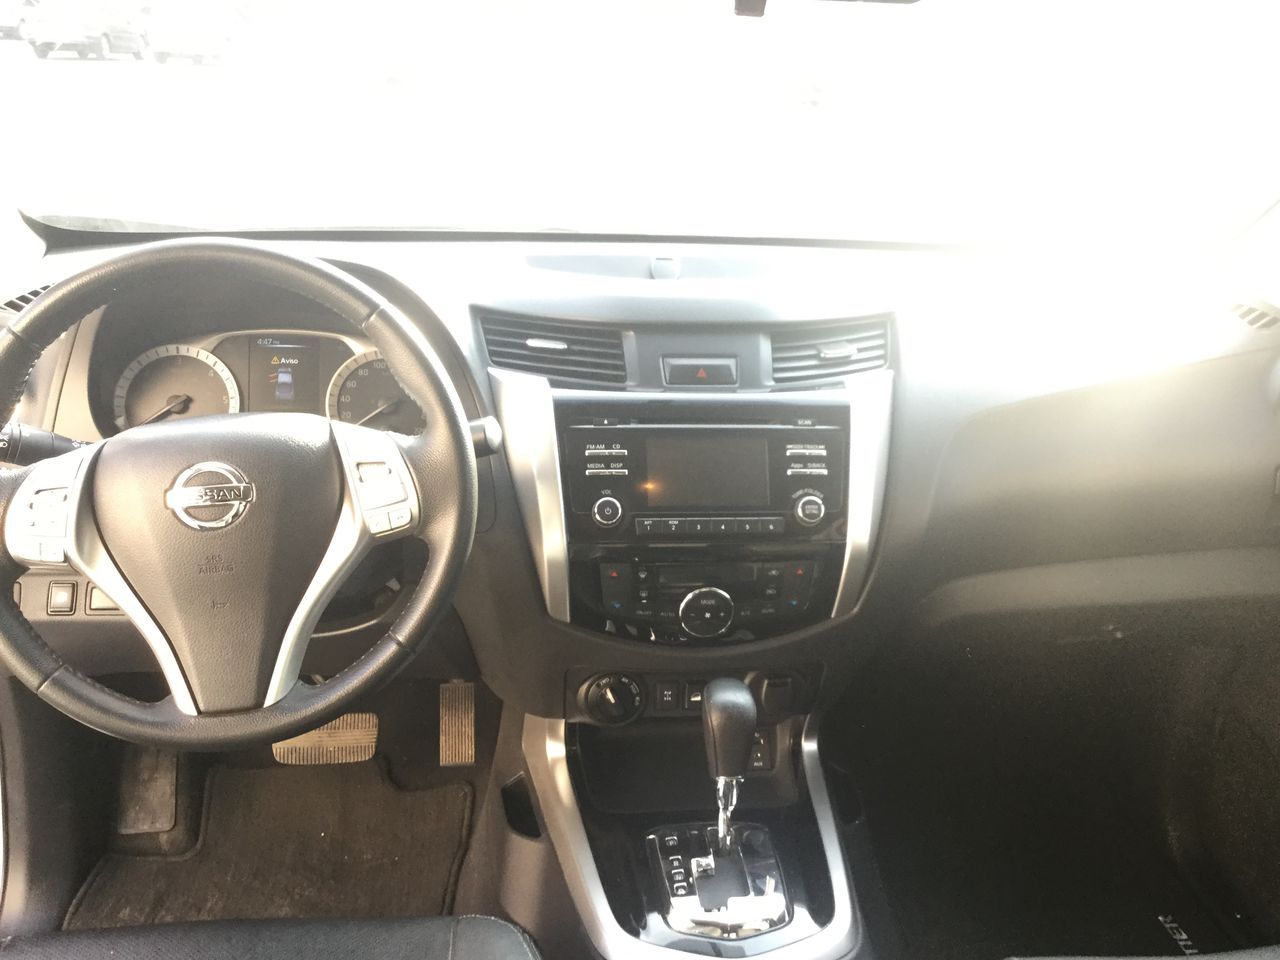 Nissan Np300 Frontier 2018